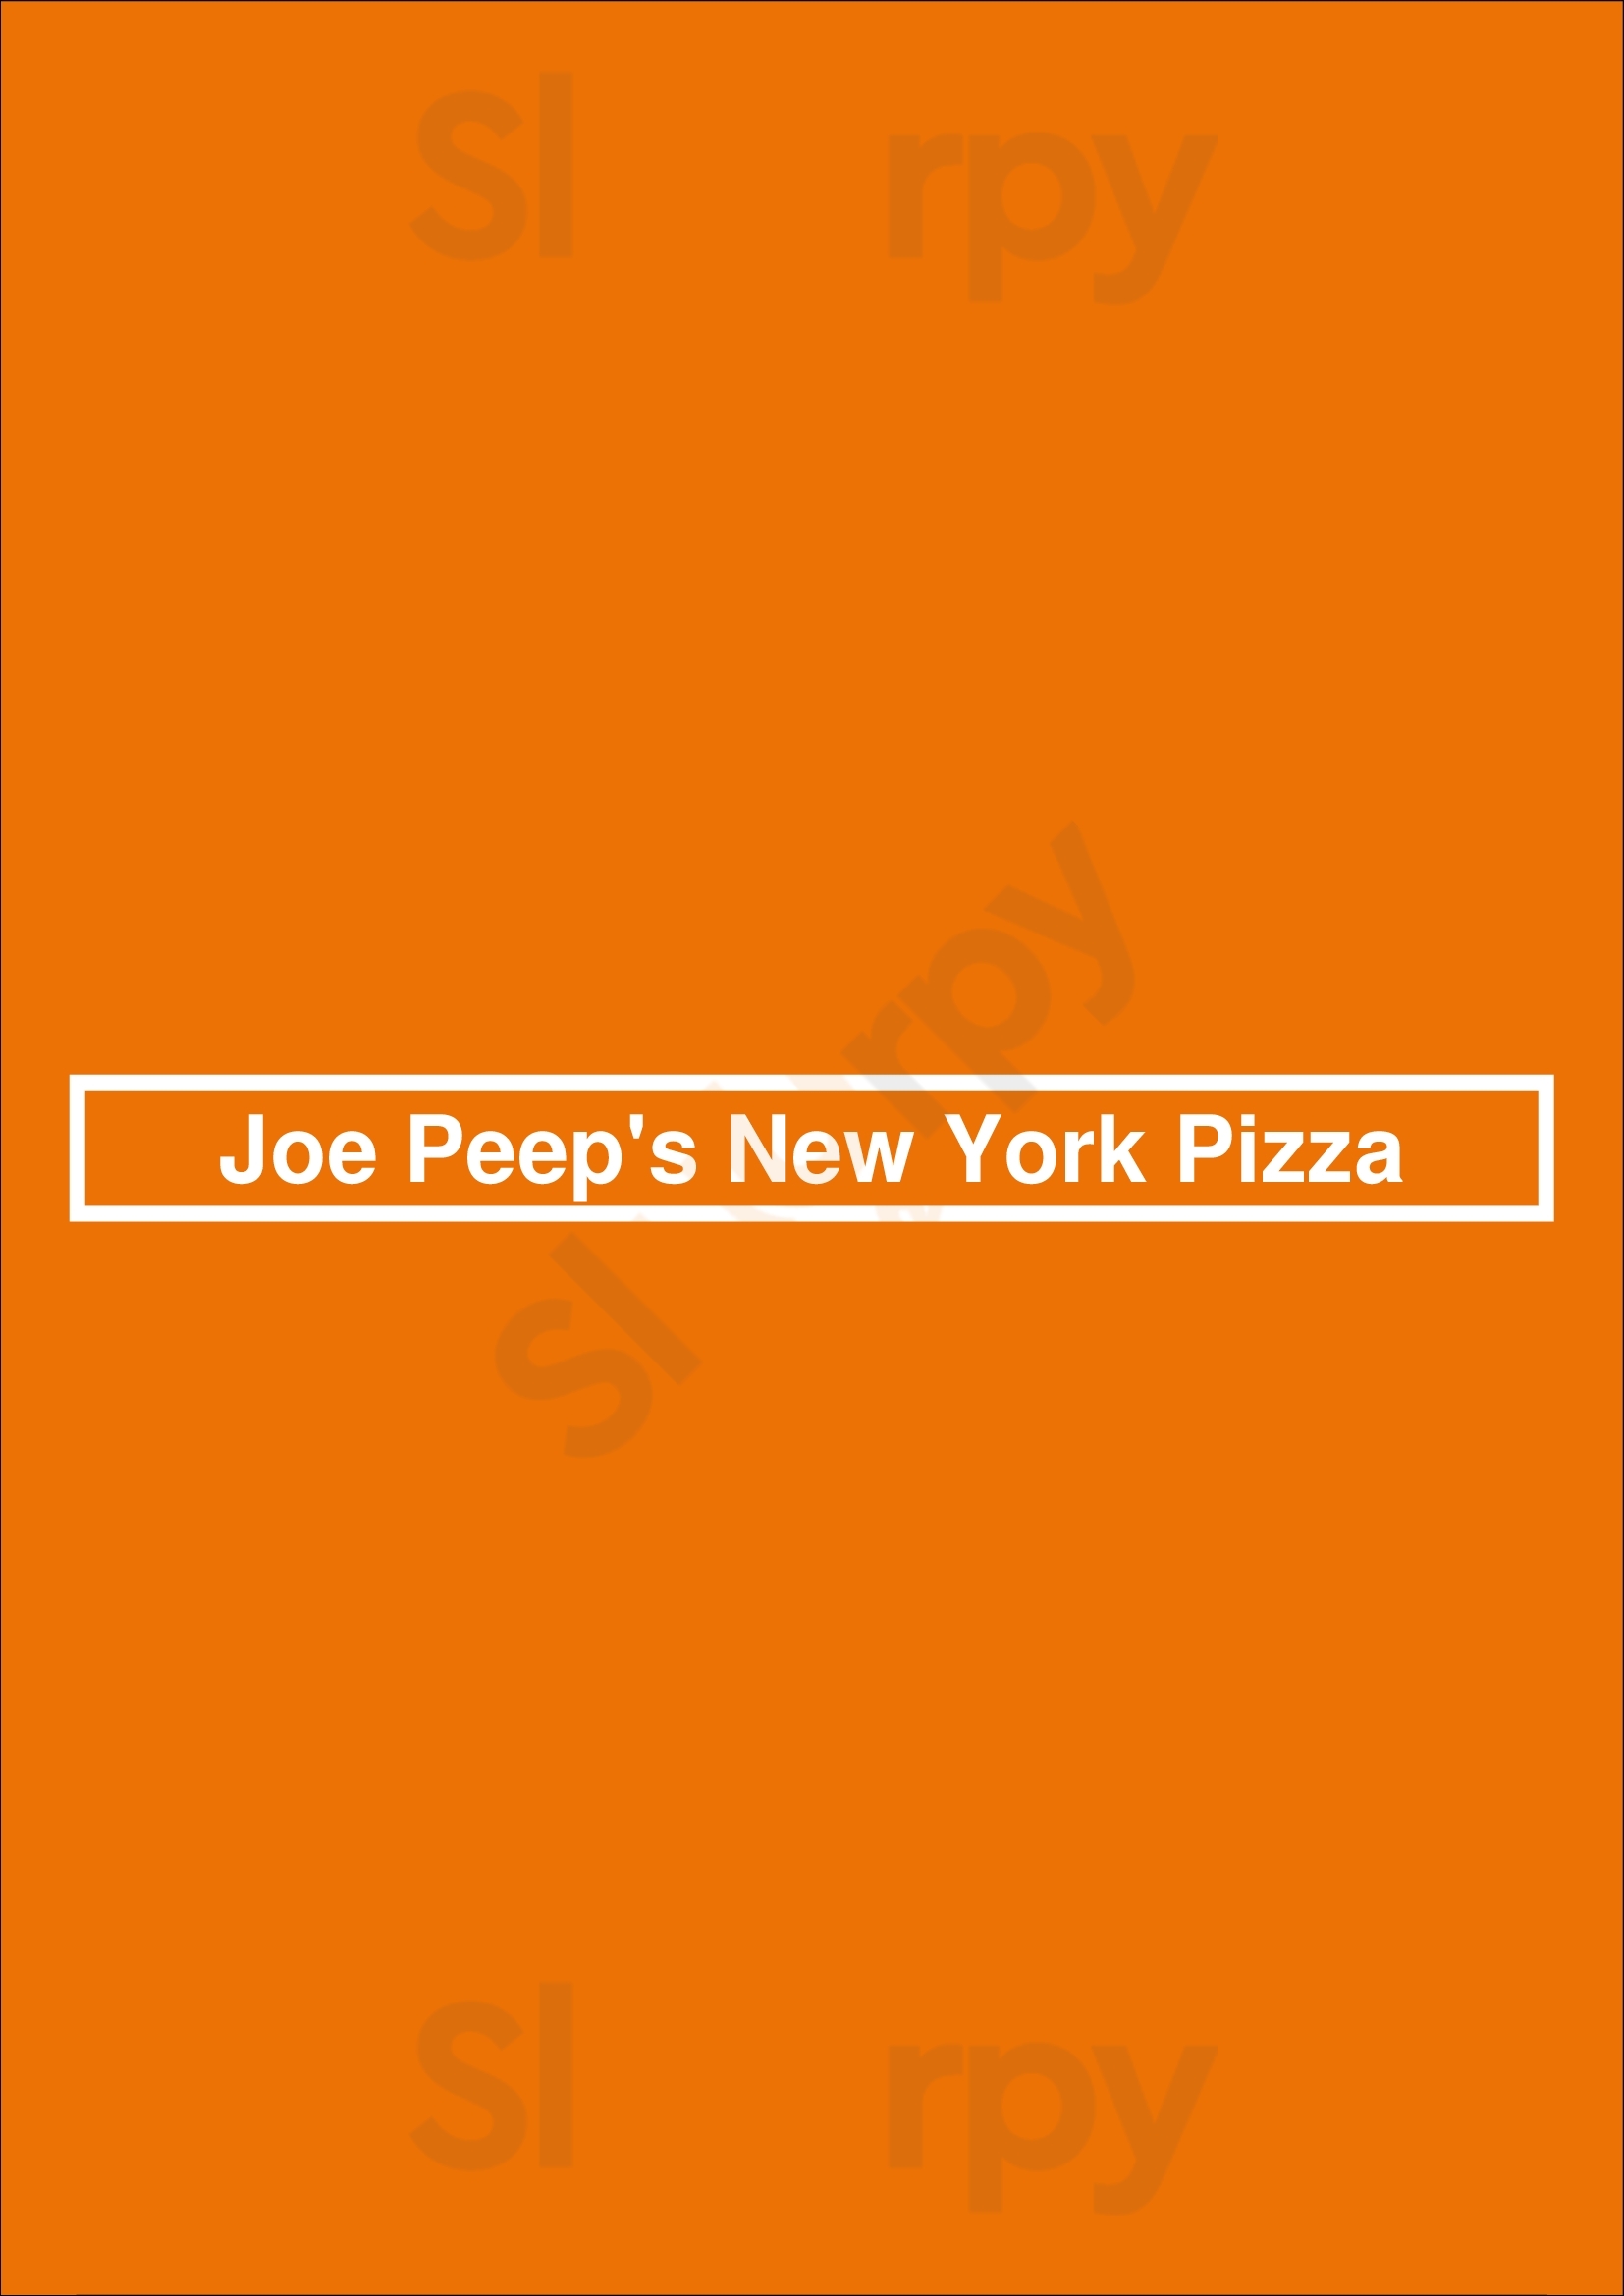 Joe Peep's New York Pizza Los Angeles Menu - 1